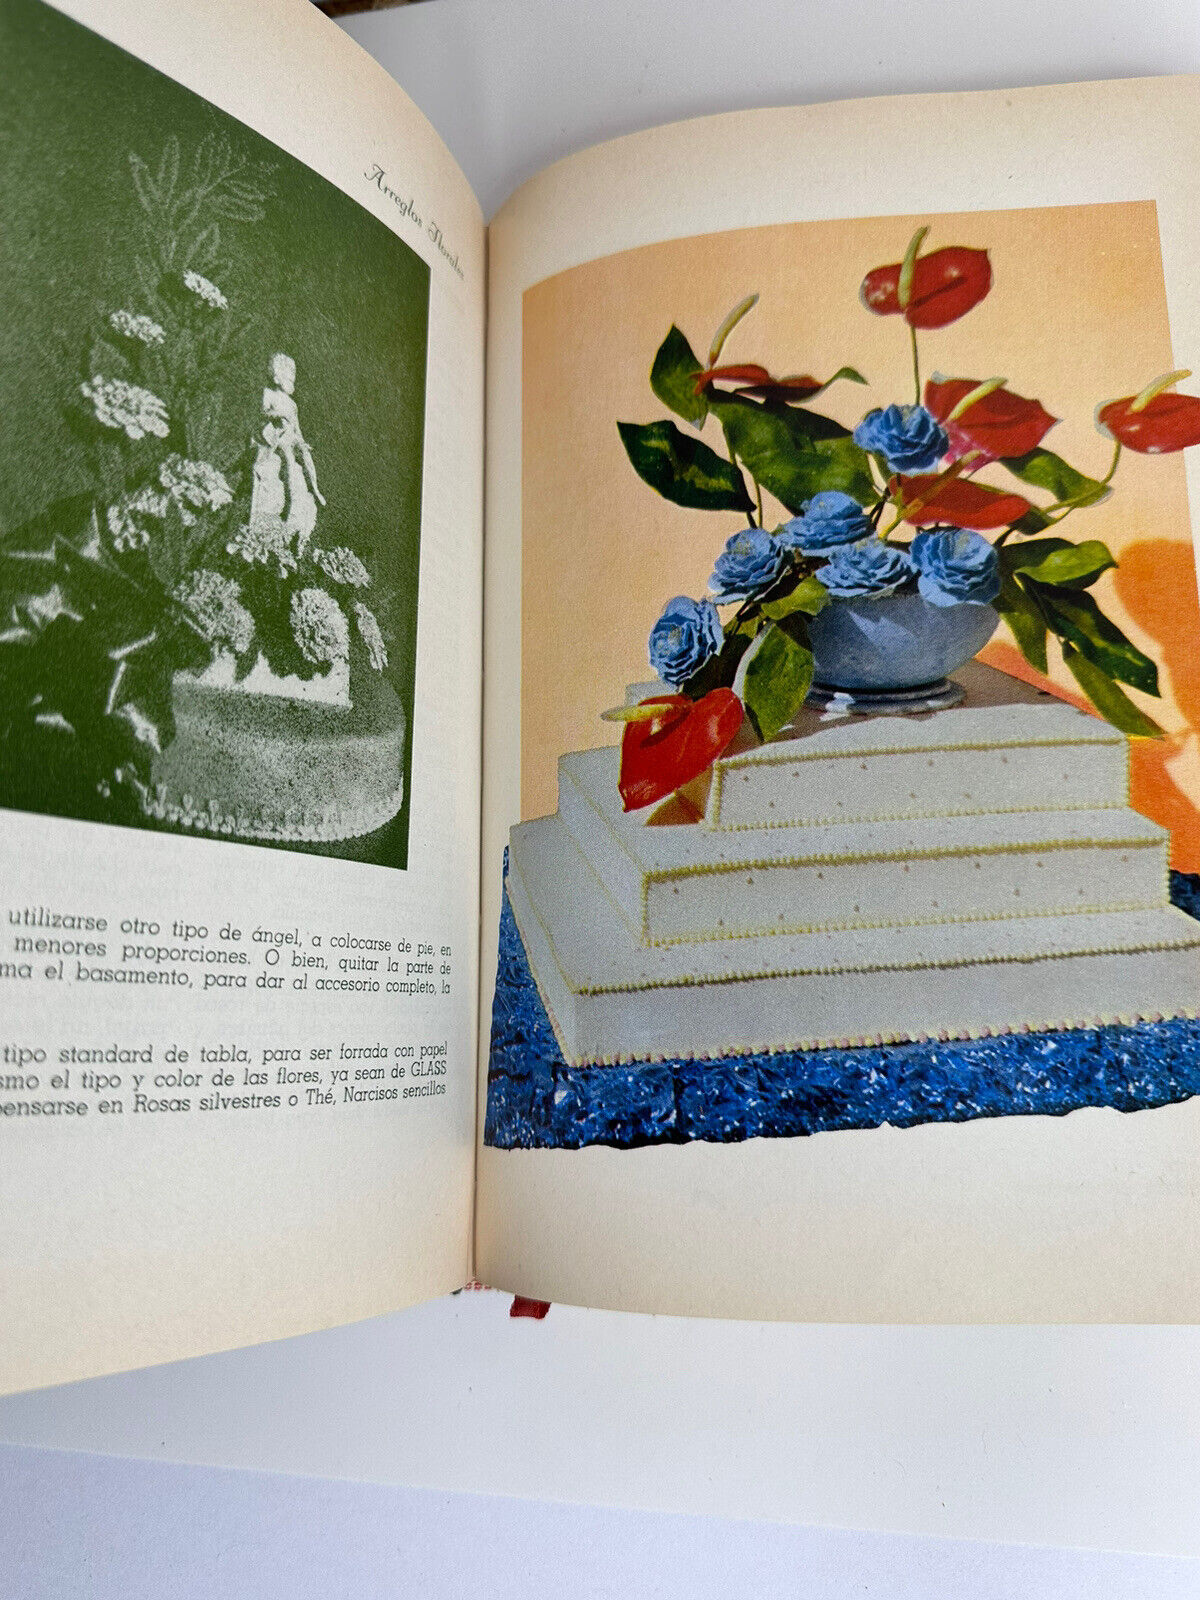 1st Edition Signed 1959 Marithé De Alvarado Arte Mexicano Del Azucar Baking Cake Book - TreasuTiques